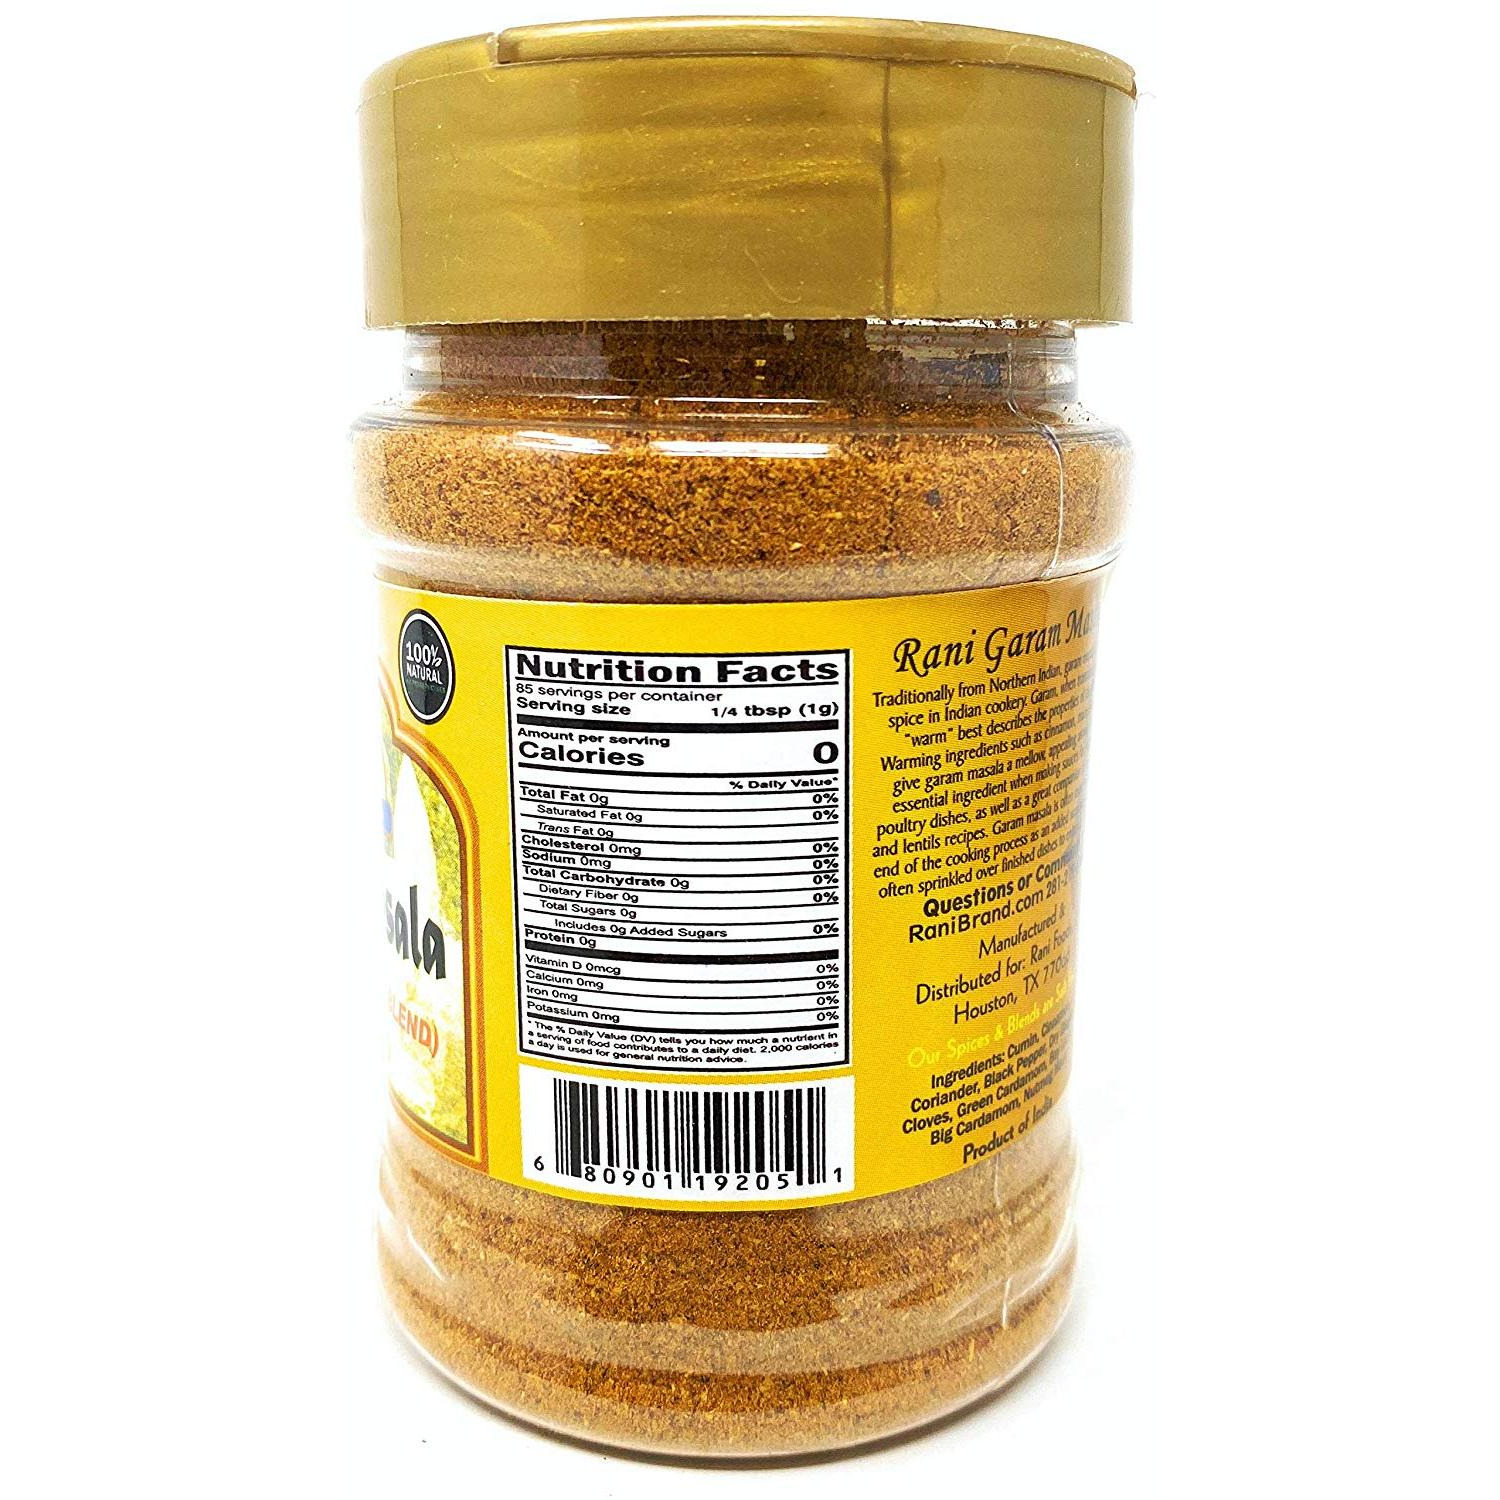 Rani Garam Masala Indian 11 Spice Blend 3oz (85g) All Natural | Gluten Free Ingredients | Salt Free | NON-GMO